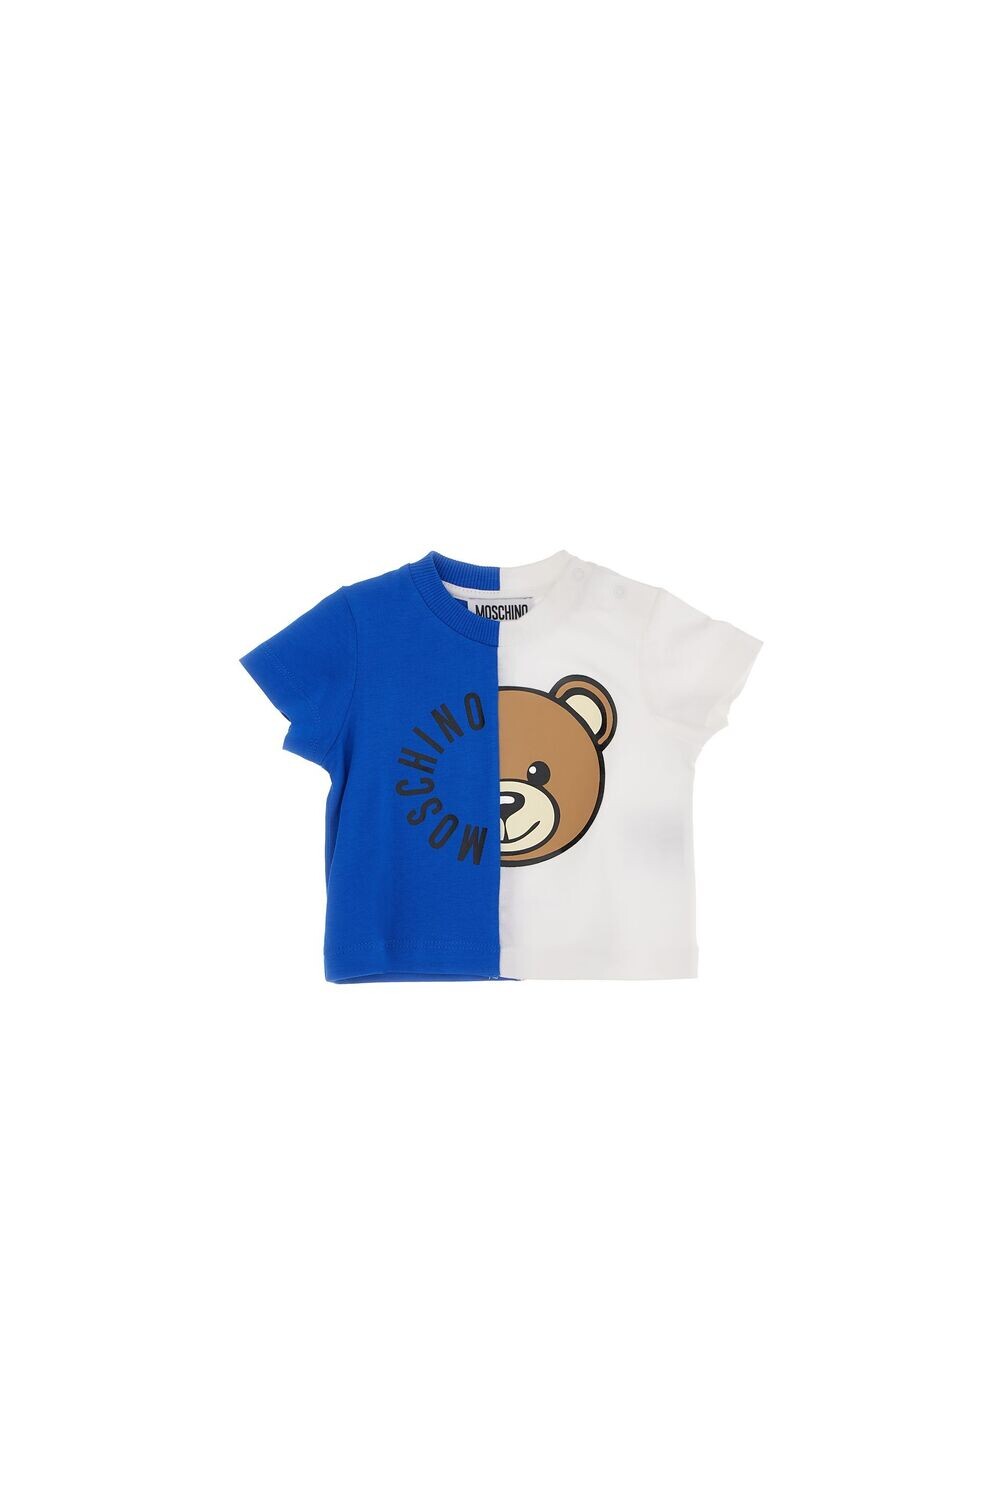 Moschino - T-shirt Teddy doppio colore, Size: 3 mesi